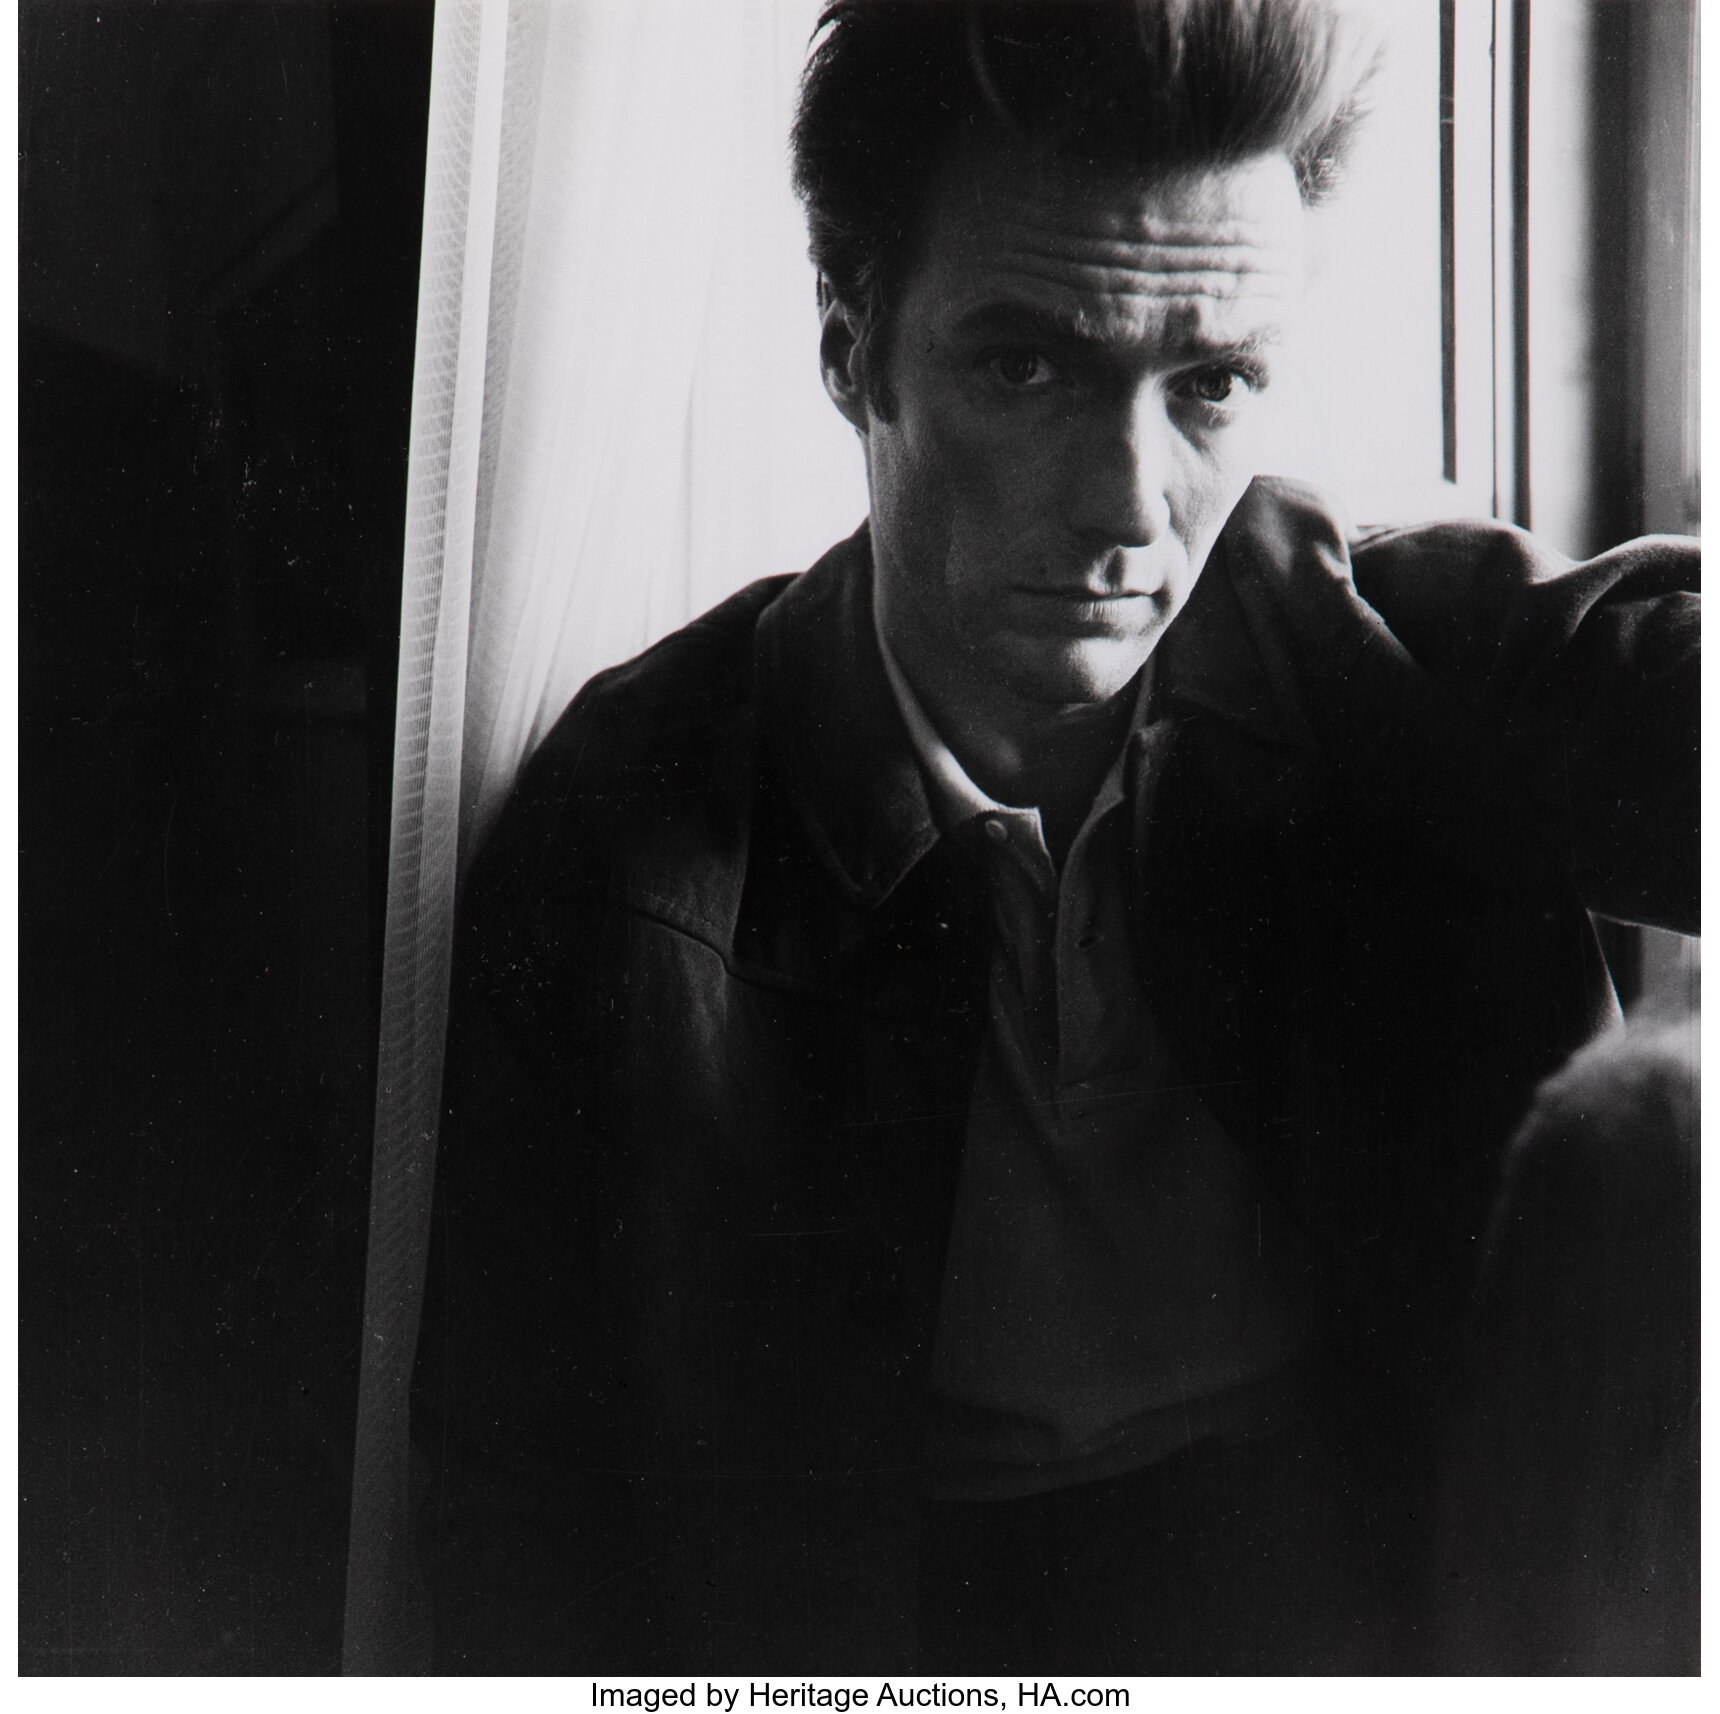 Clint Eastwood Oversize Portrait Photograph By Lawrence Schiller Lot 1291 Heritage Auctions 1394